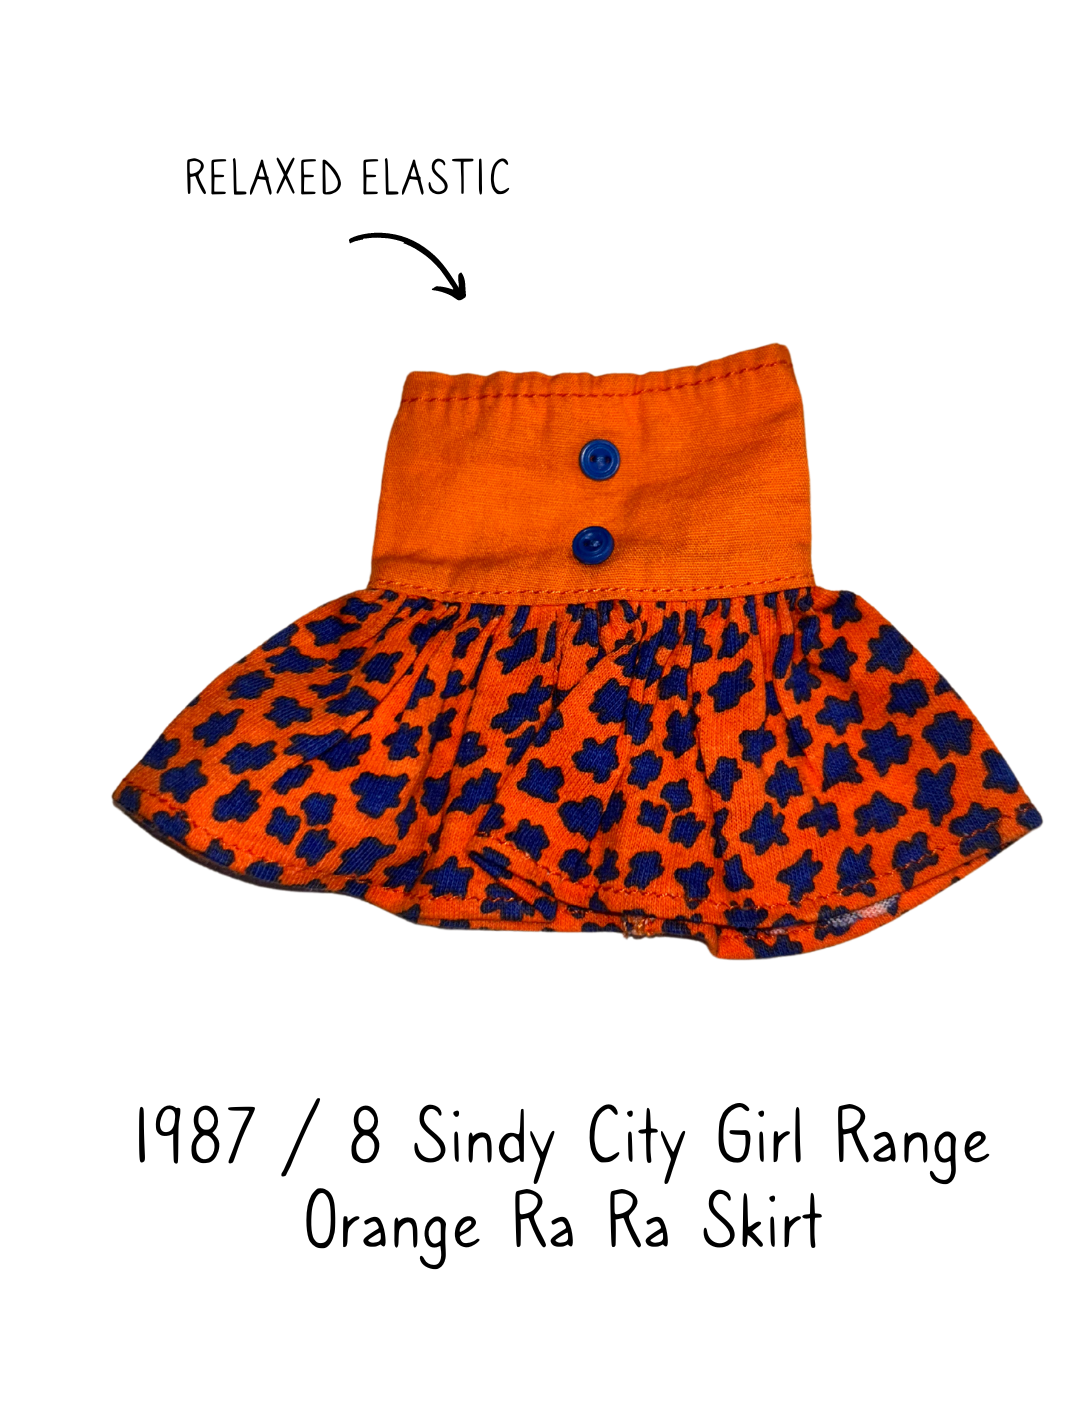 1988 Hasbro Sindy City Girl Orange Ra Ra Skirt